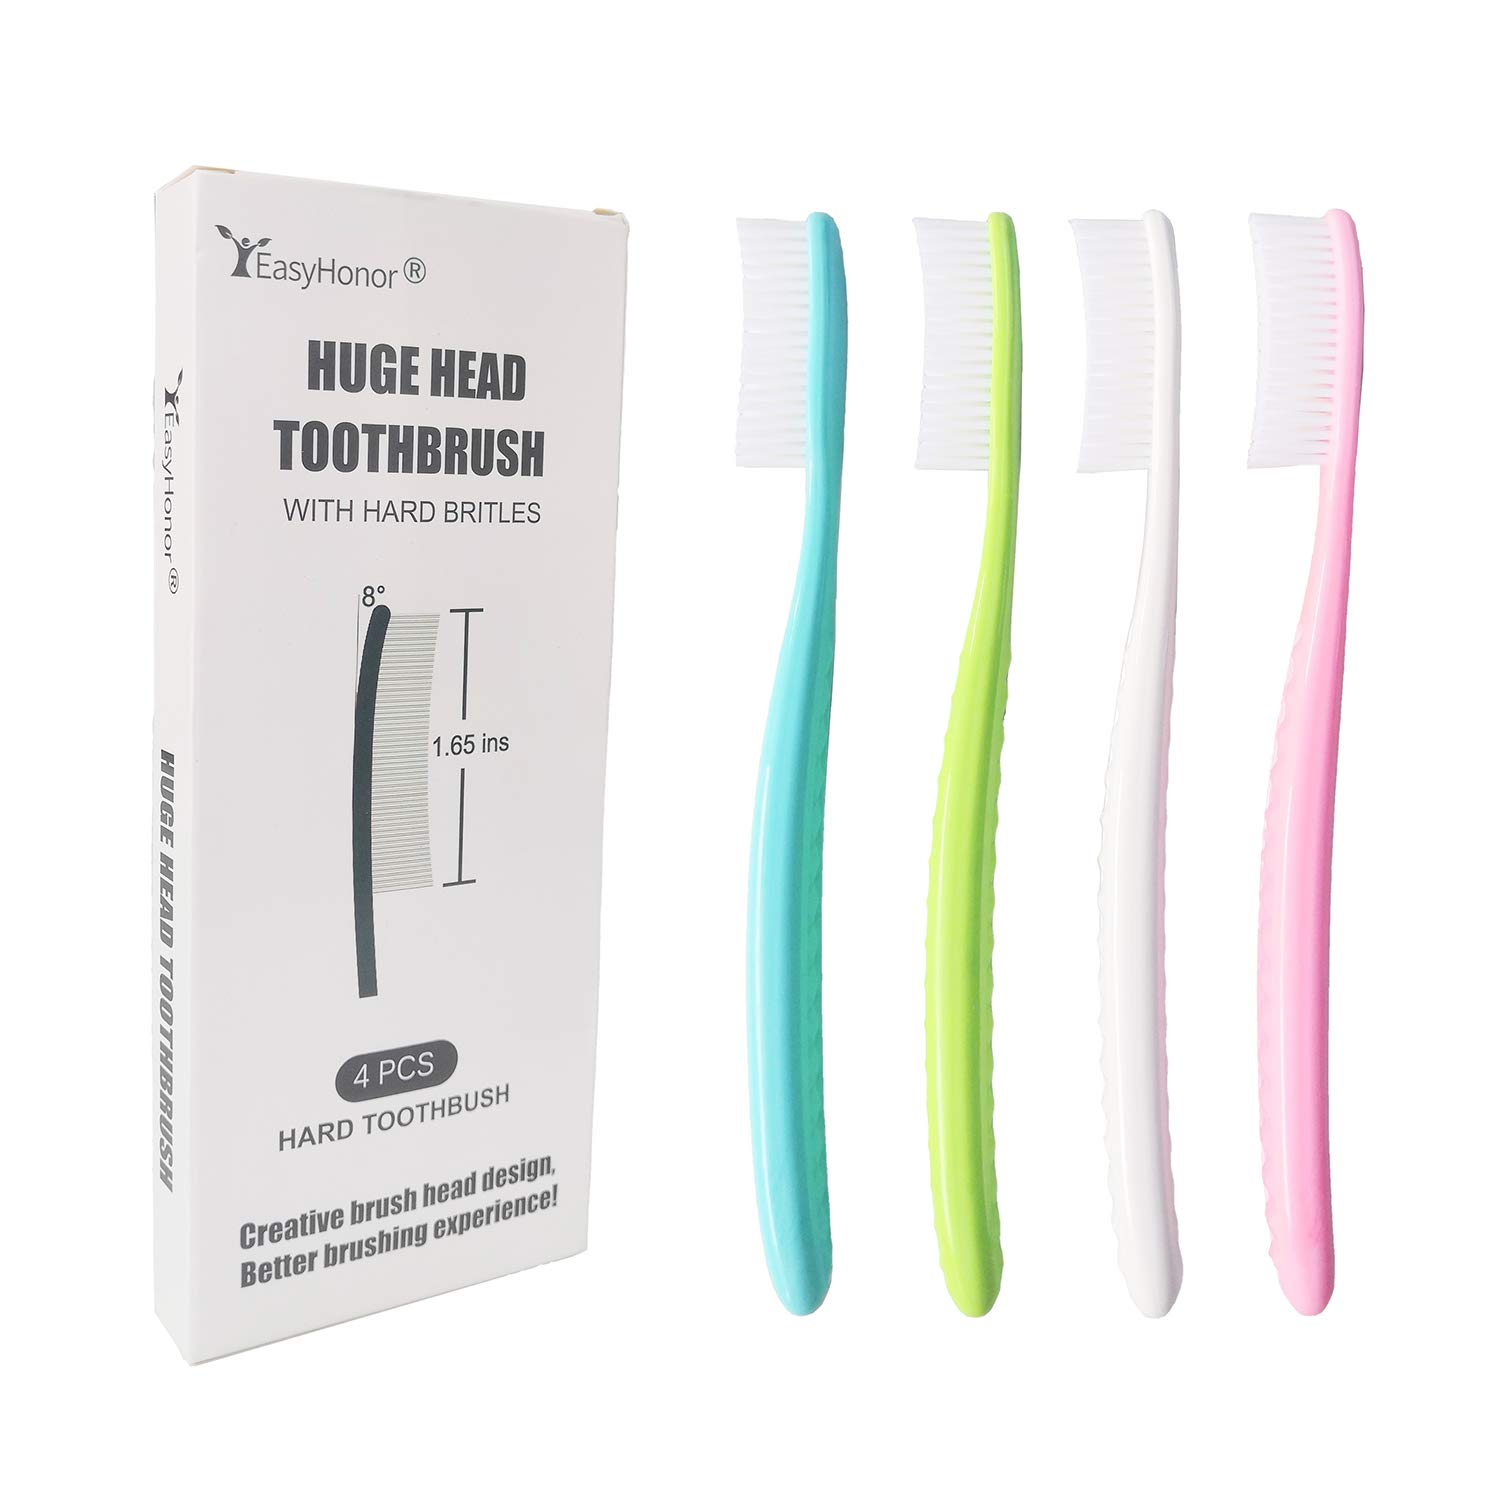 Easyhonor Huge Head Toothbrush, Big Toothbrush, Giant Head Toothbrush, Hard & Firm Toothbrush Bristles Bpa Free For Proper Denta